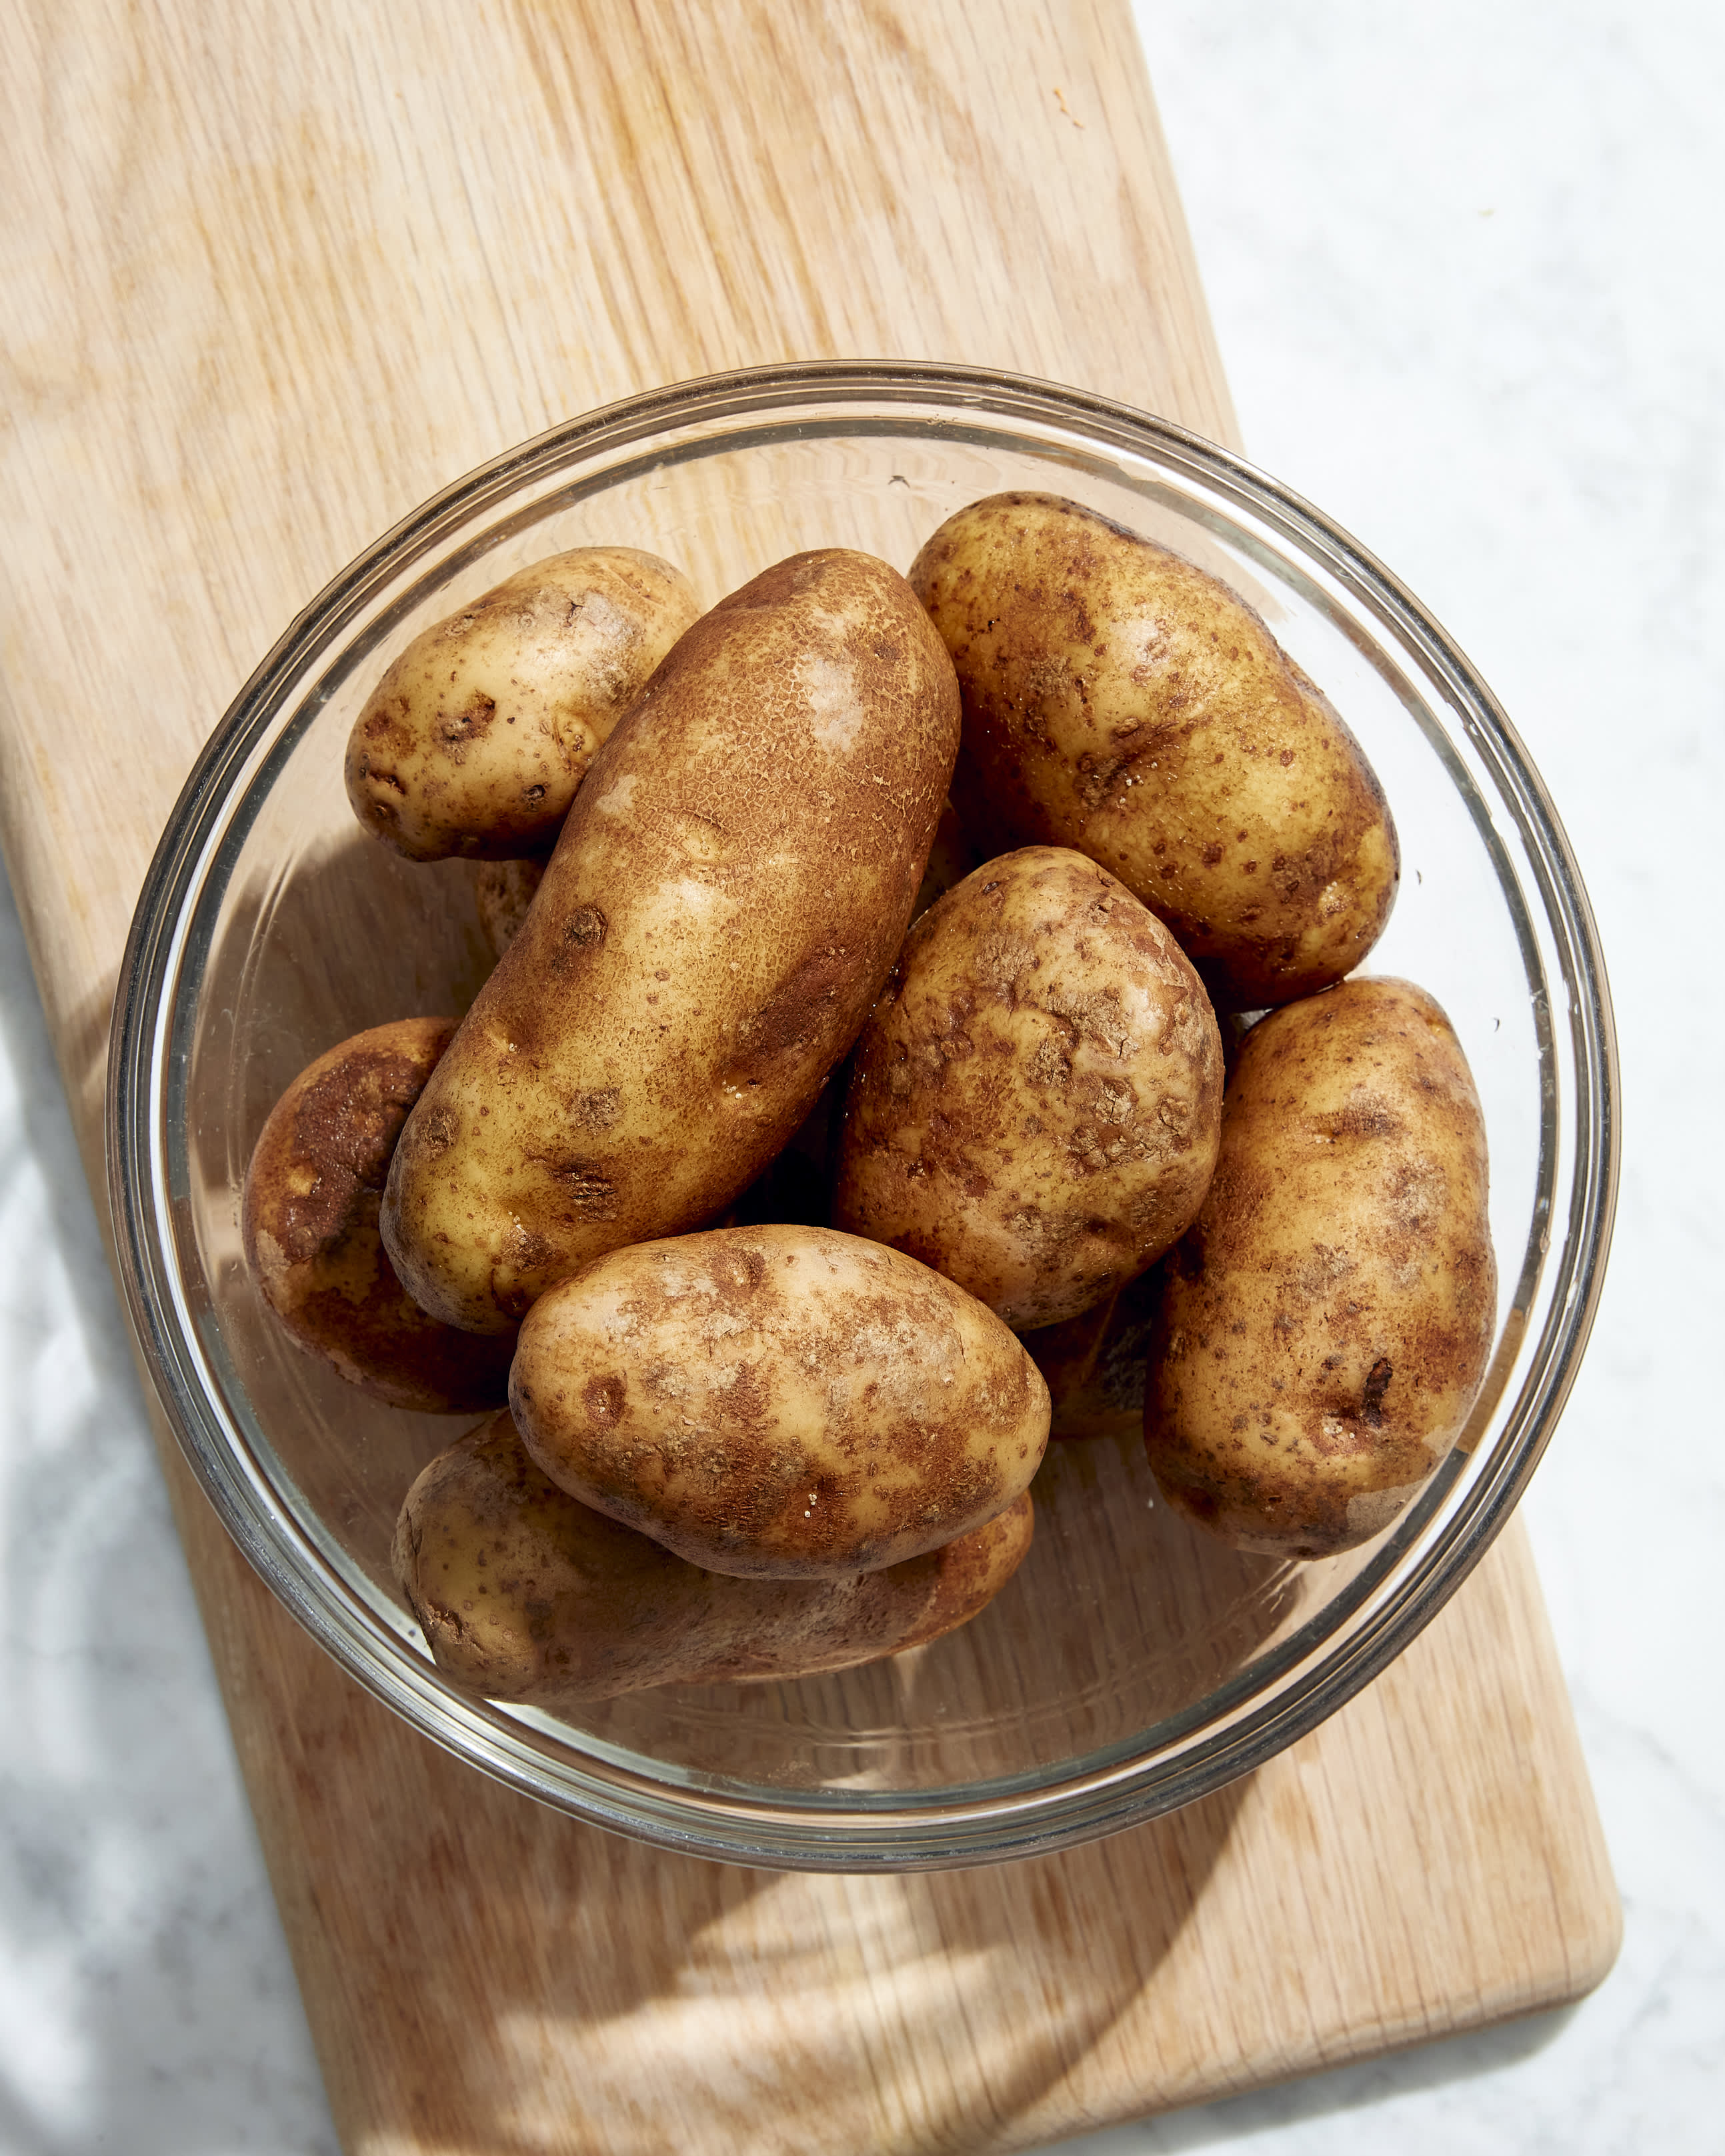 https://cdn.apartmenttherapy.info/image/upload/v1660582244/k/Photo/Series/2022-09-how-to-freeze-potatoes%20/How-to-Freeze-Potato-183.jpg